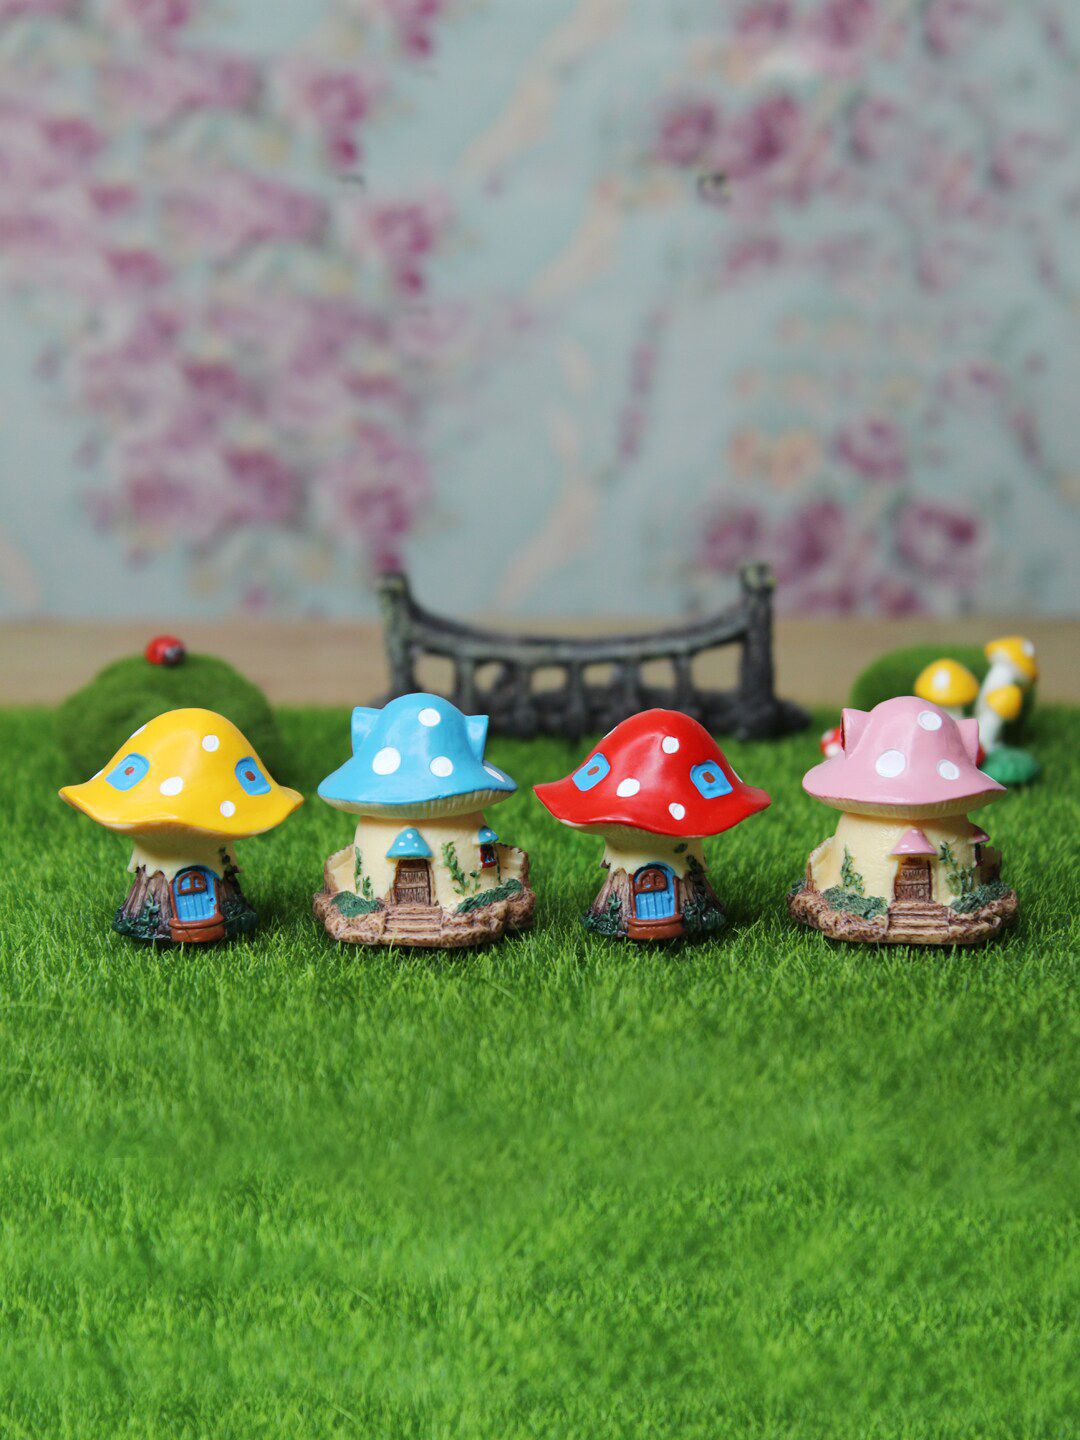 Wonderland Set Of 4 Mushroom House Miniature Toys Garden Accessory Price in India